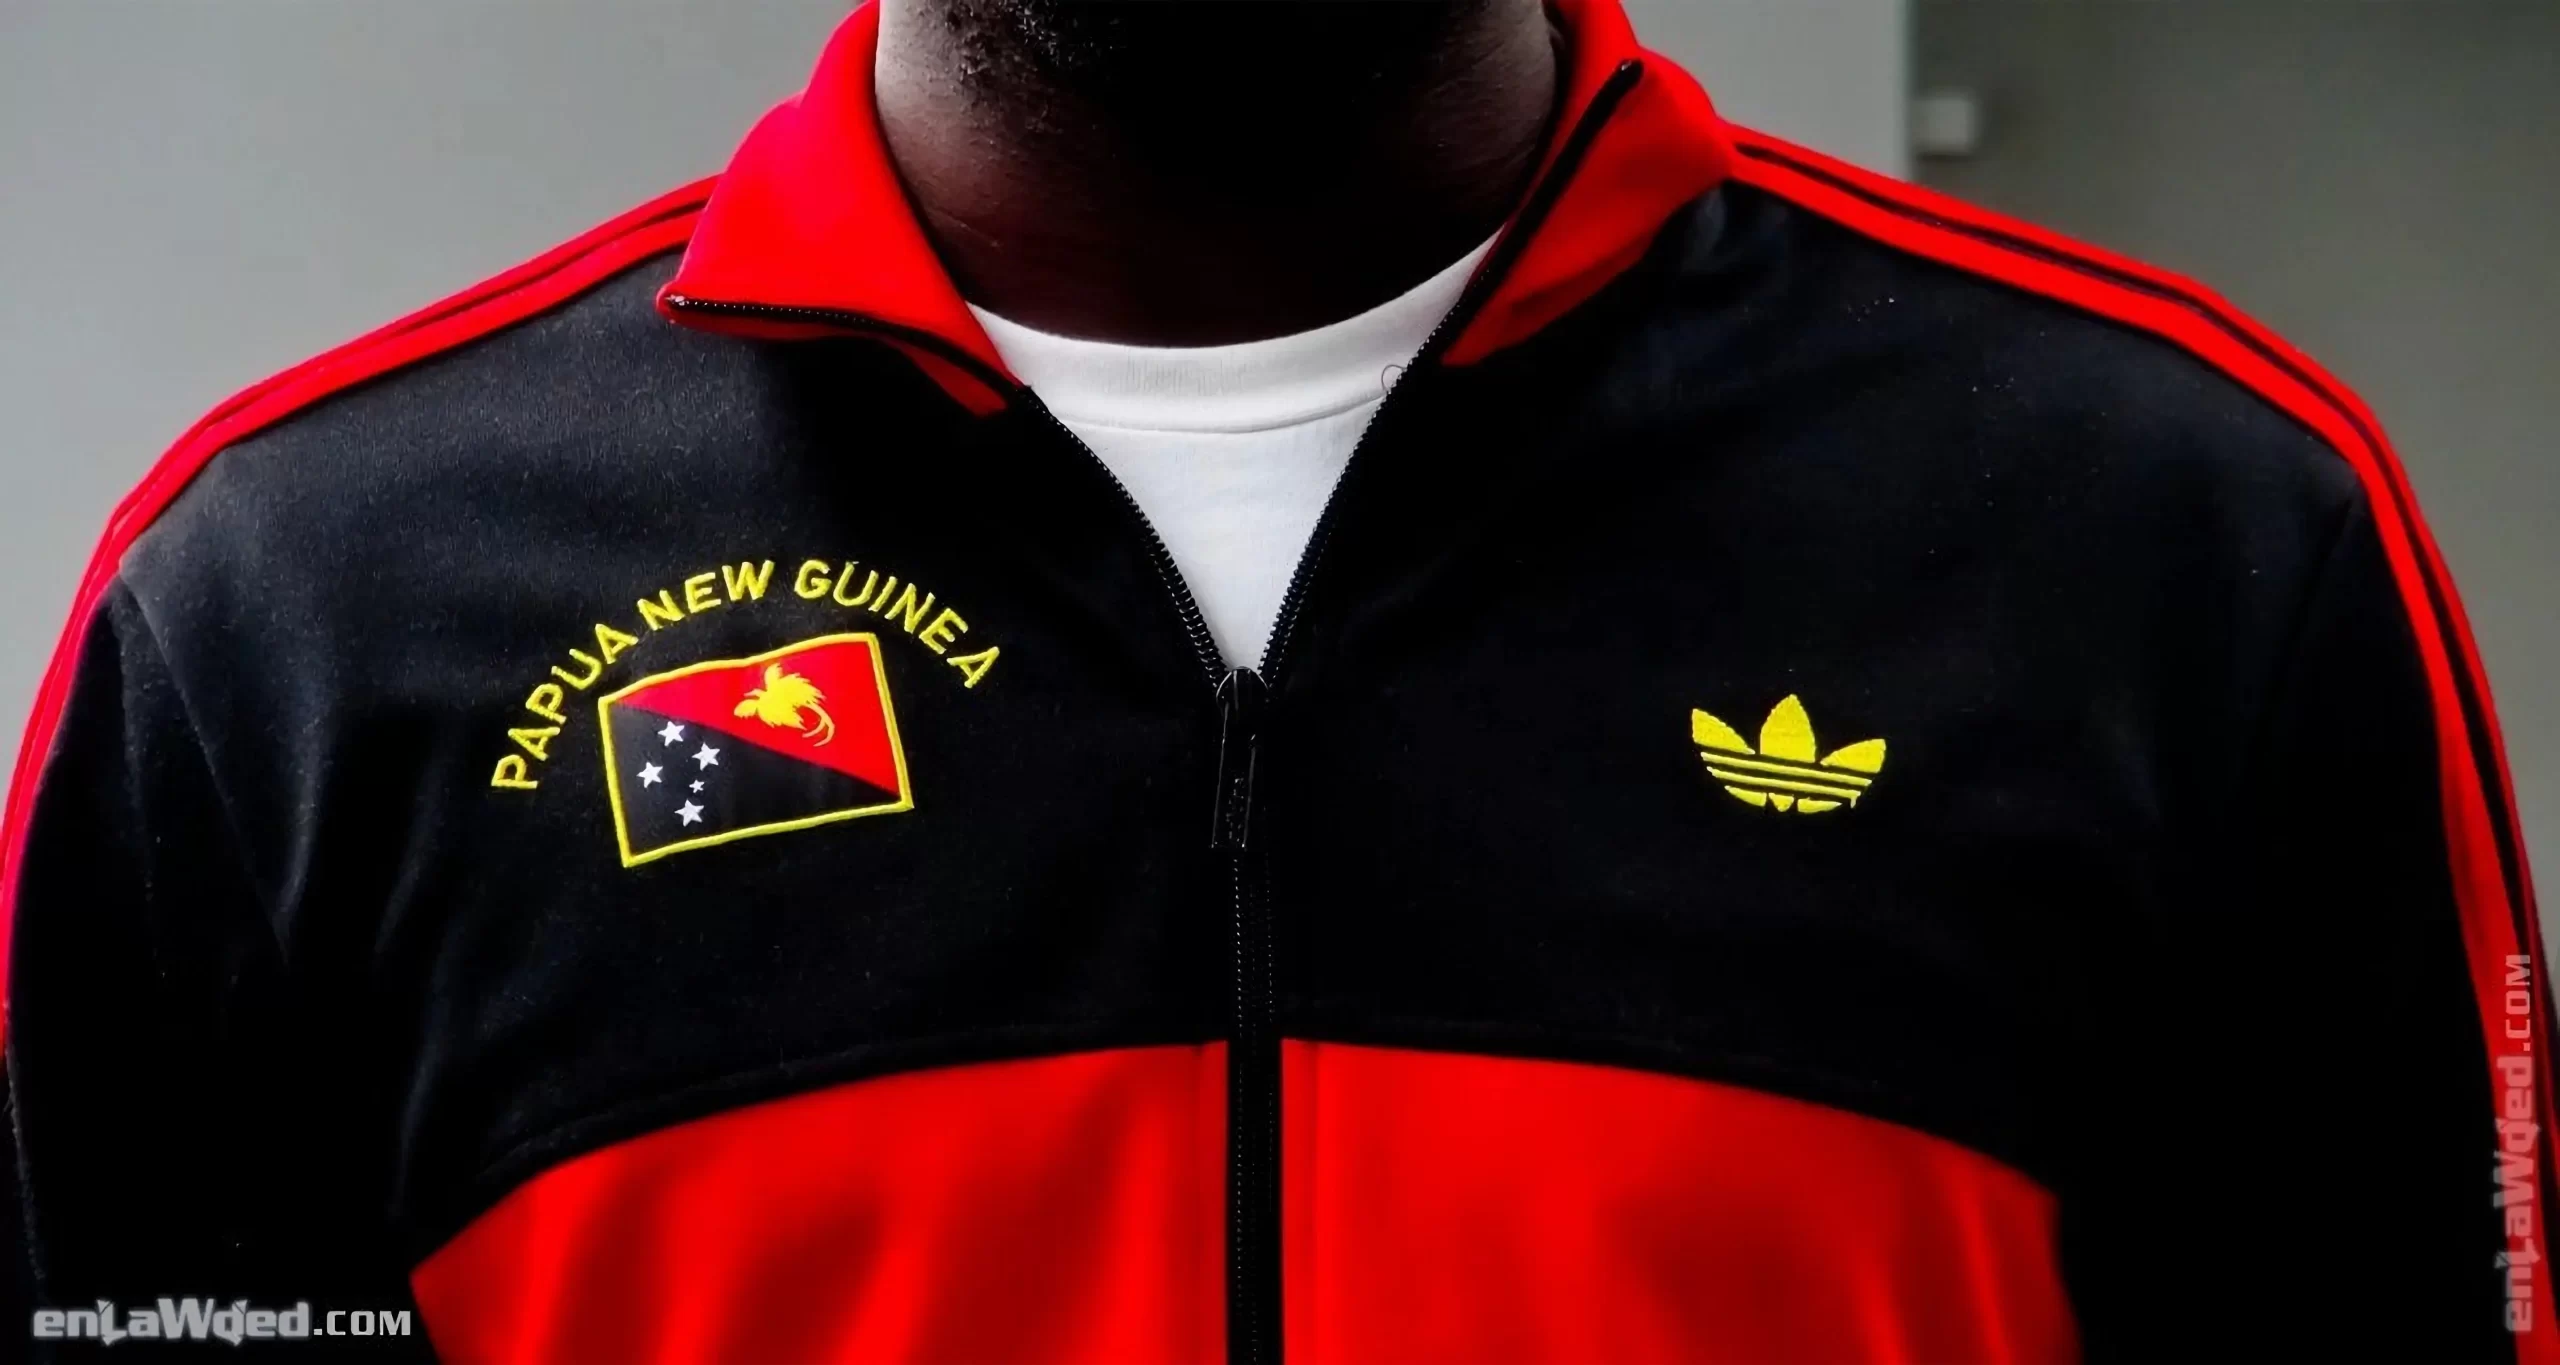 Men’s 2008 Papua New Guinea Track Top by Adidas Originals: Intriguing (EnLawded.com file #lmcf3qaakdid2bvdtmn)